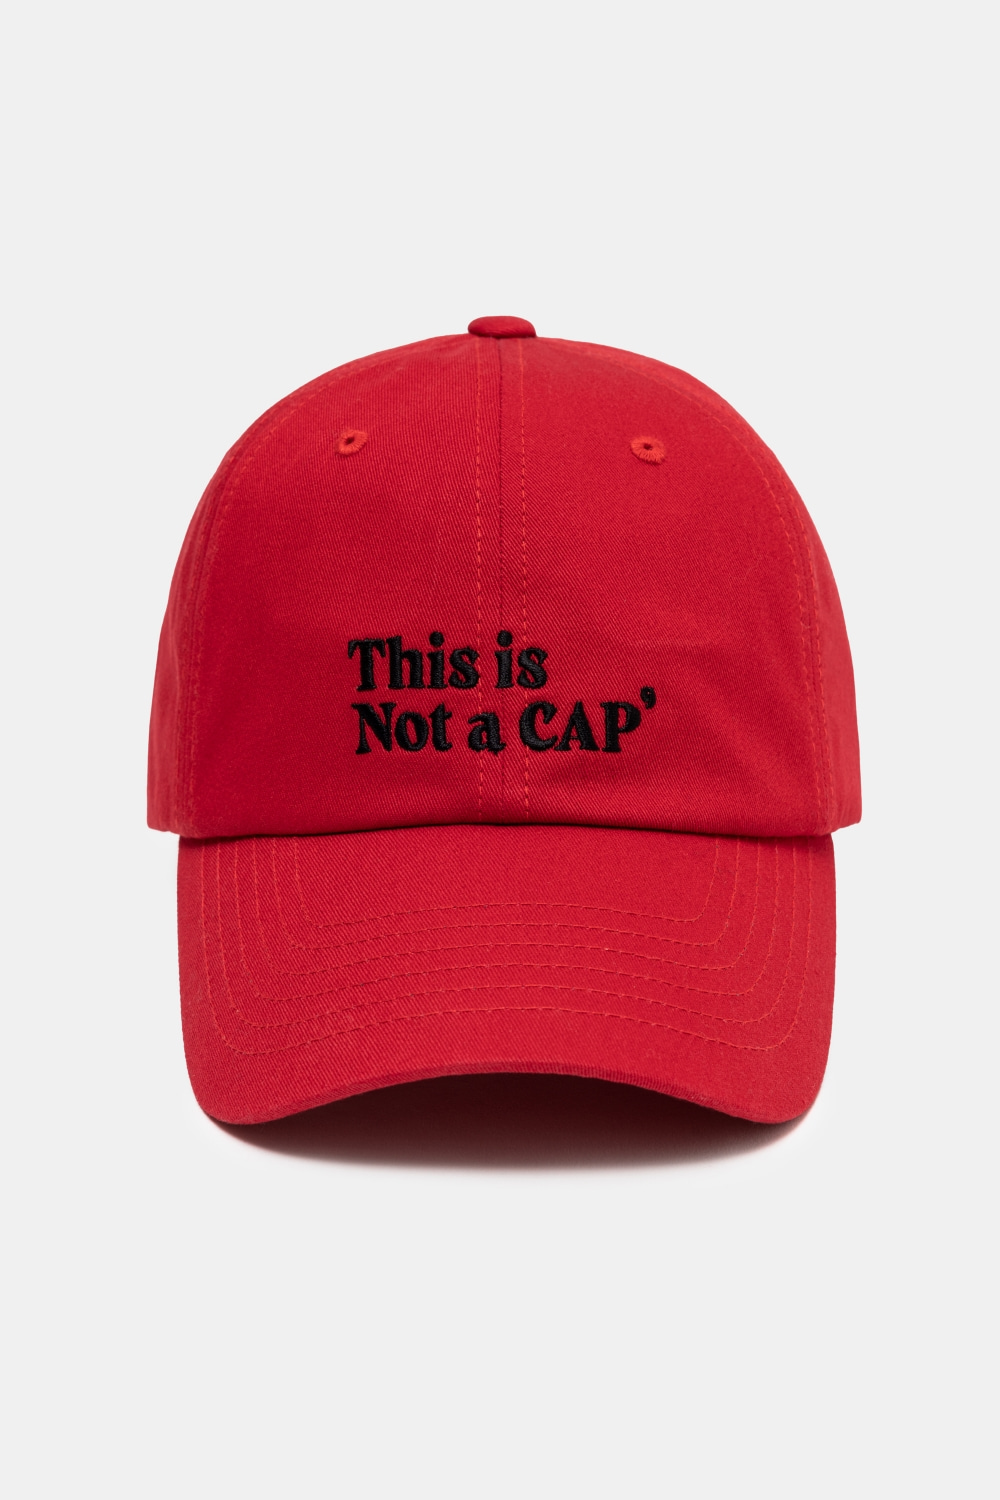 NOT A CAP_RED